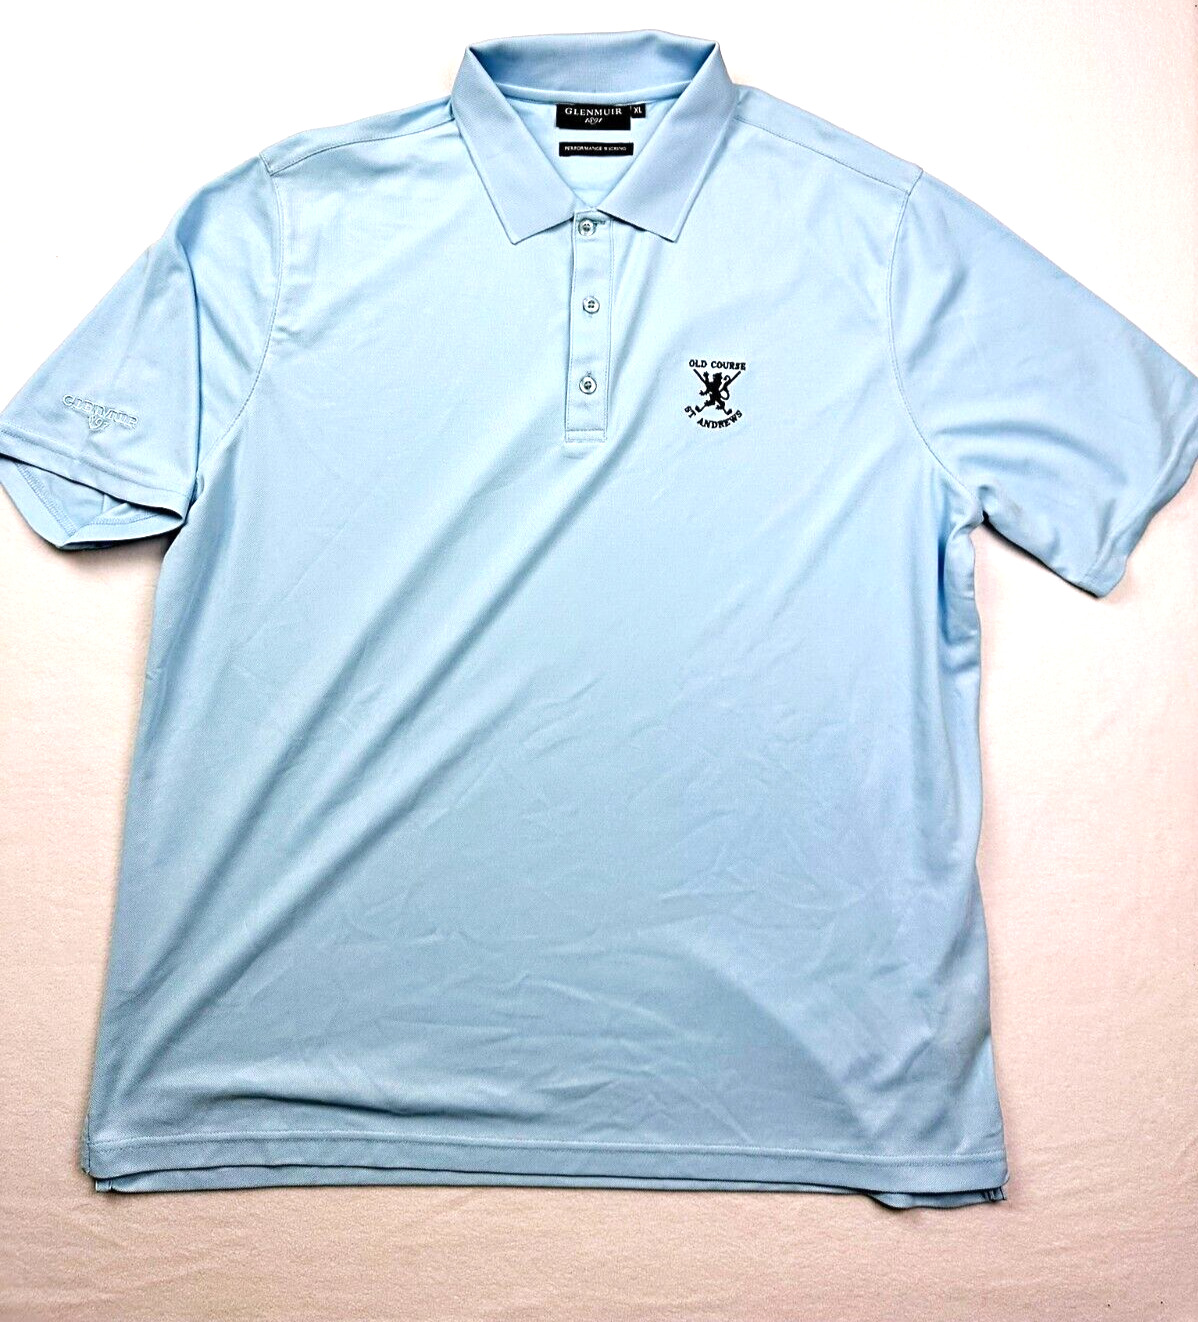 Old Course St Andrews Glen Muir 1891 Mens Polo shirt size XL Blue Golf